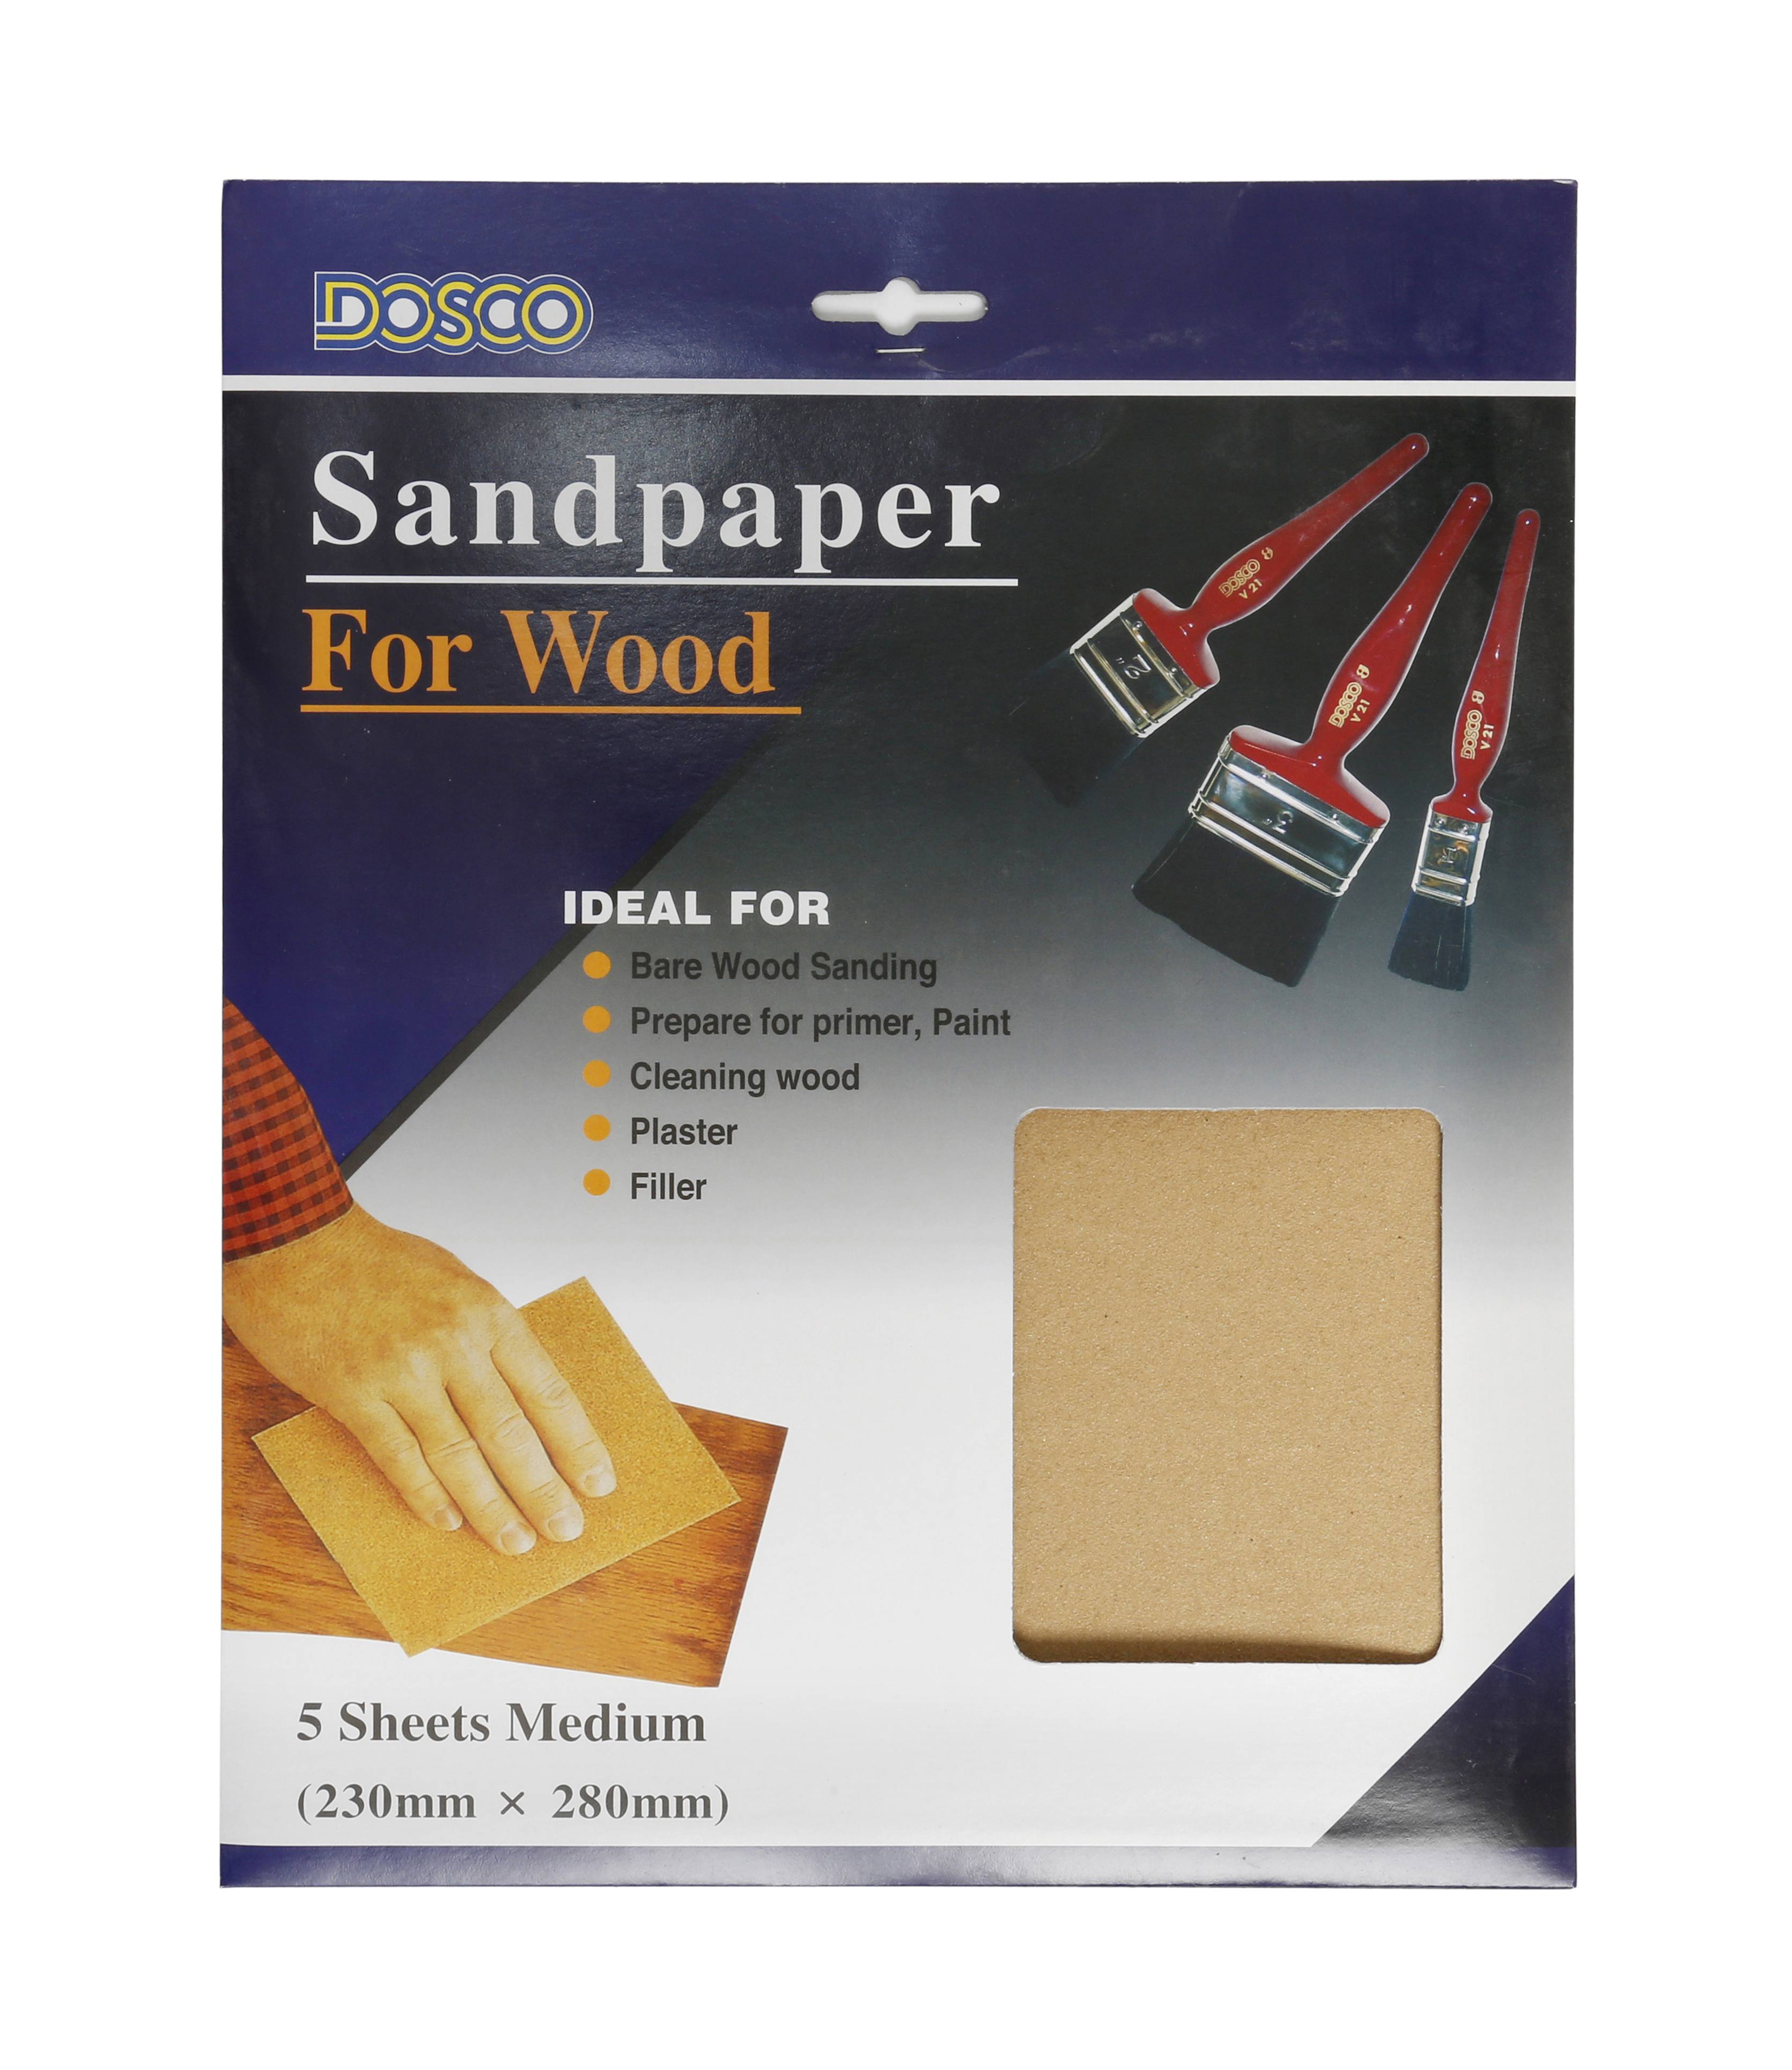 Dosco Sandpaper For Wood 5 Sheets Medium